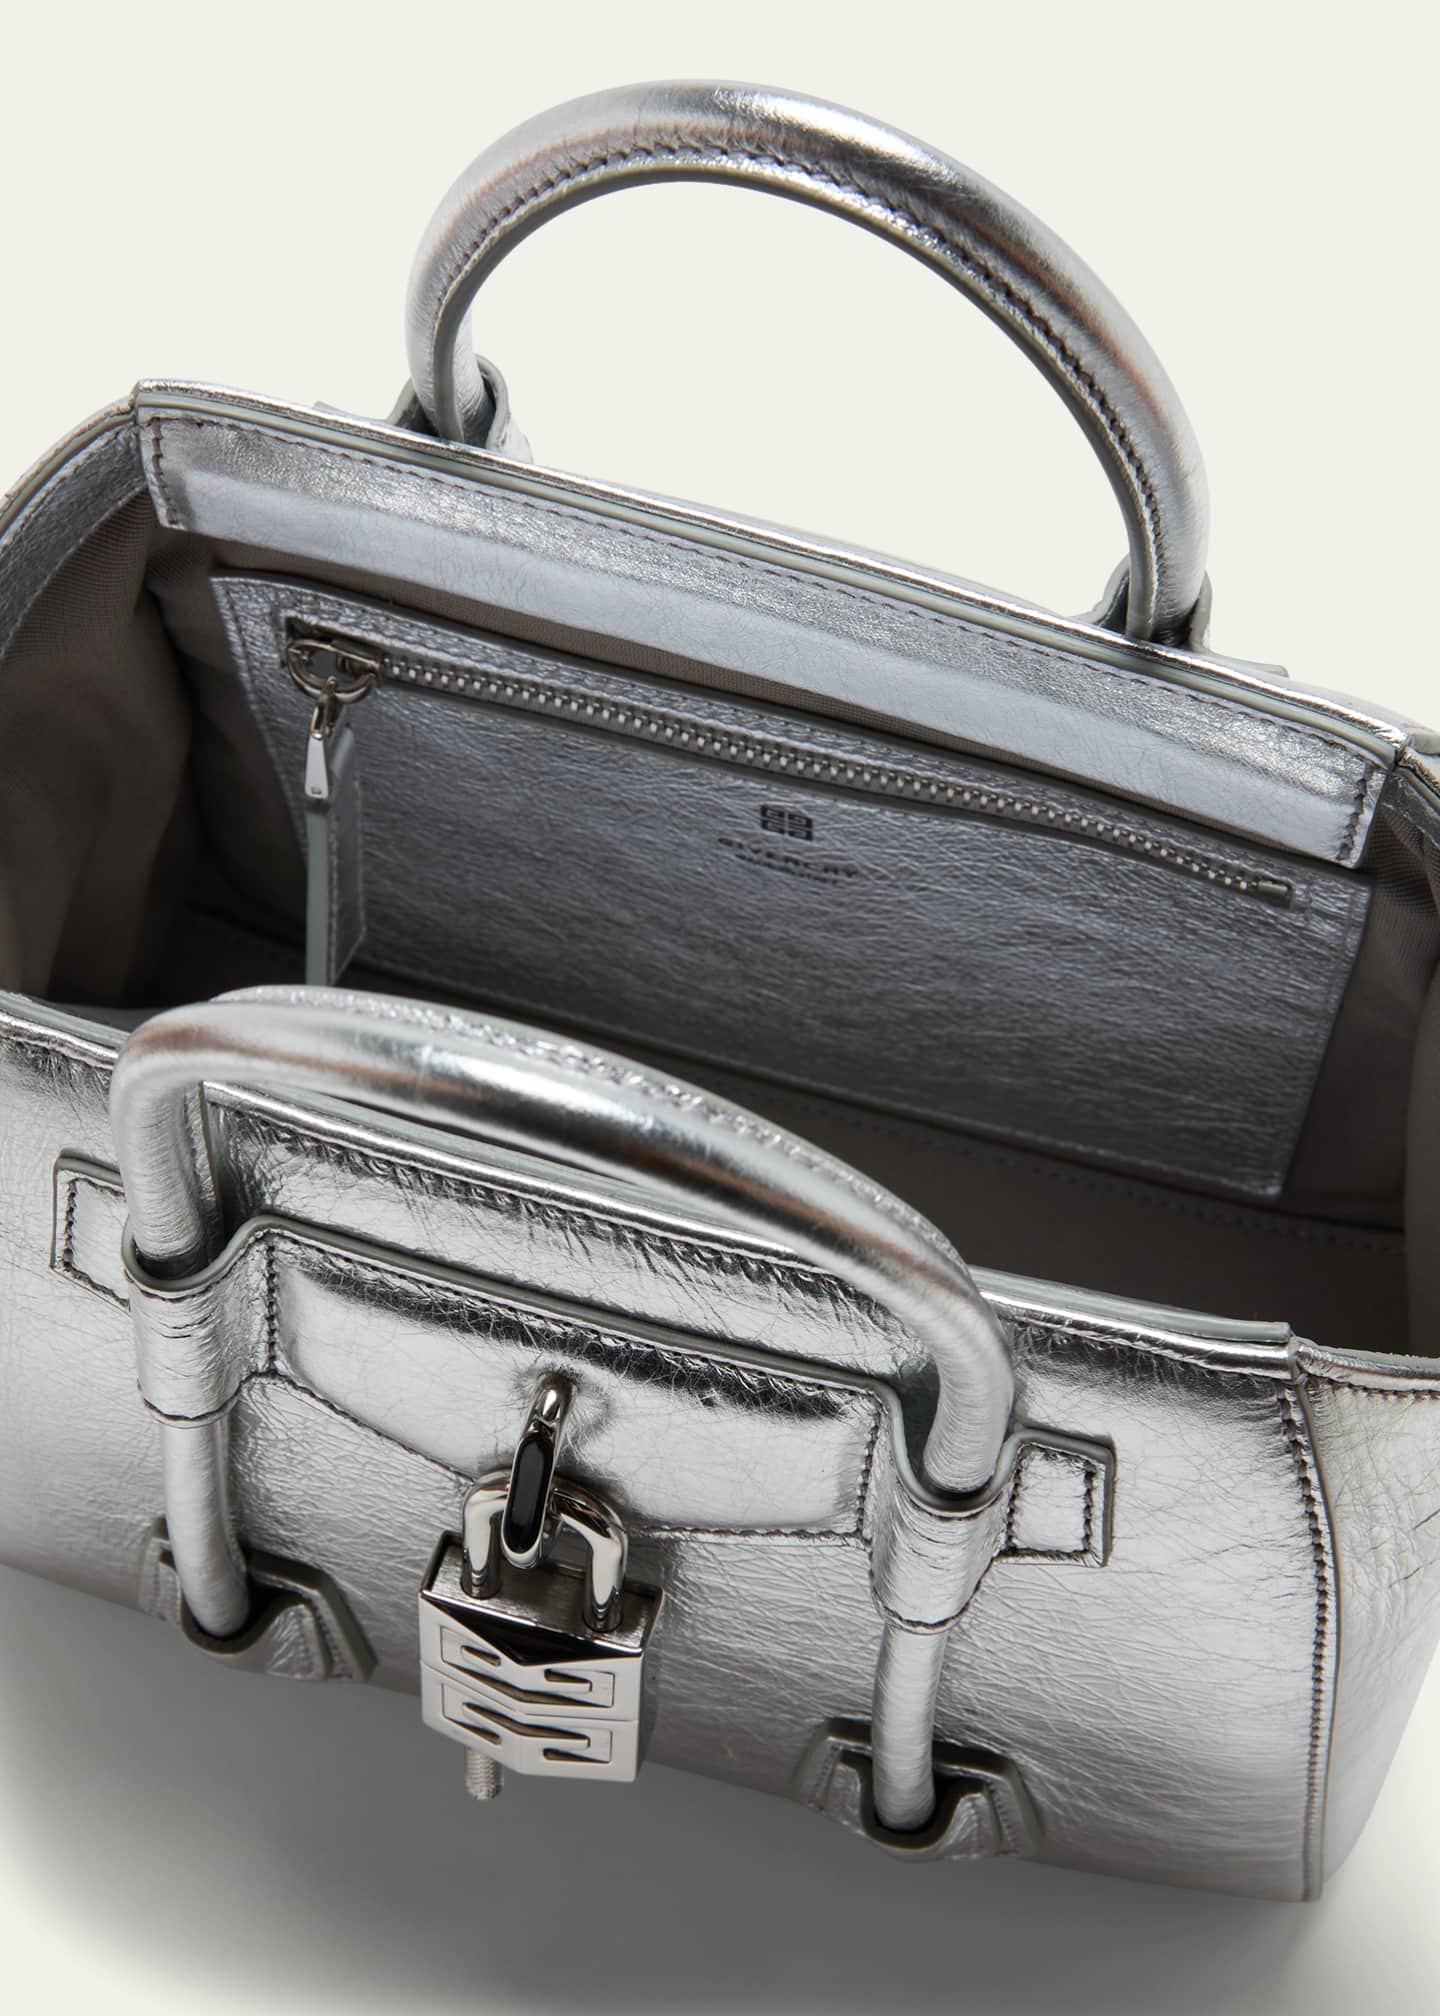 Givenchy Antigona Toy Crossbody Bag in Leather - Bergdorf Goodman